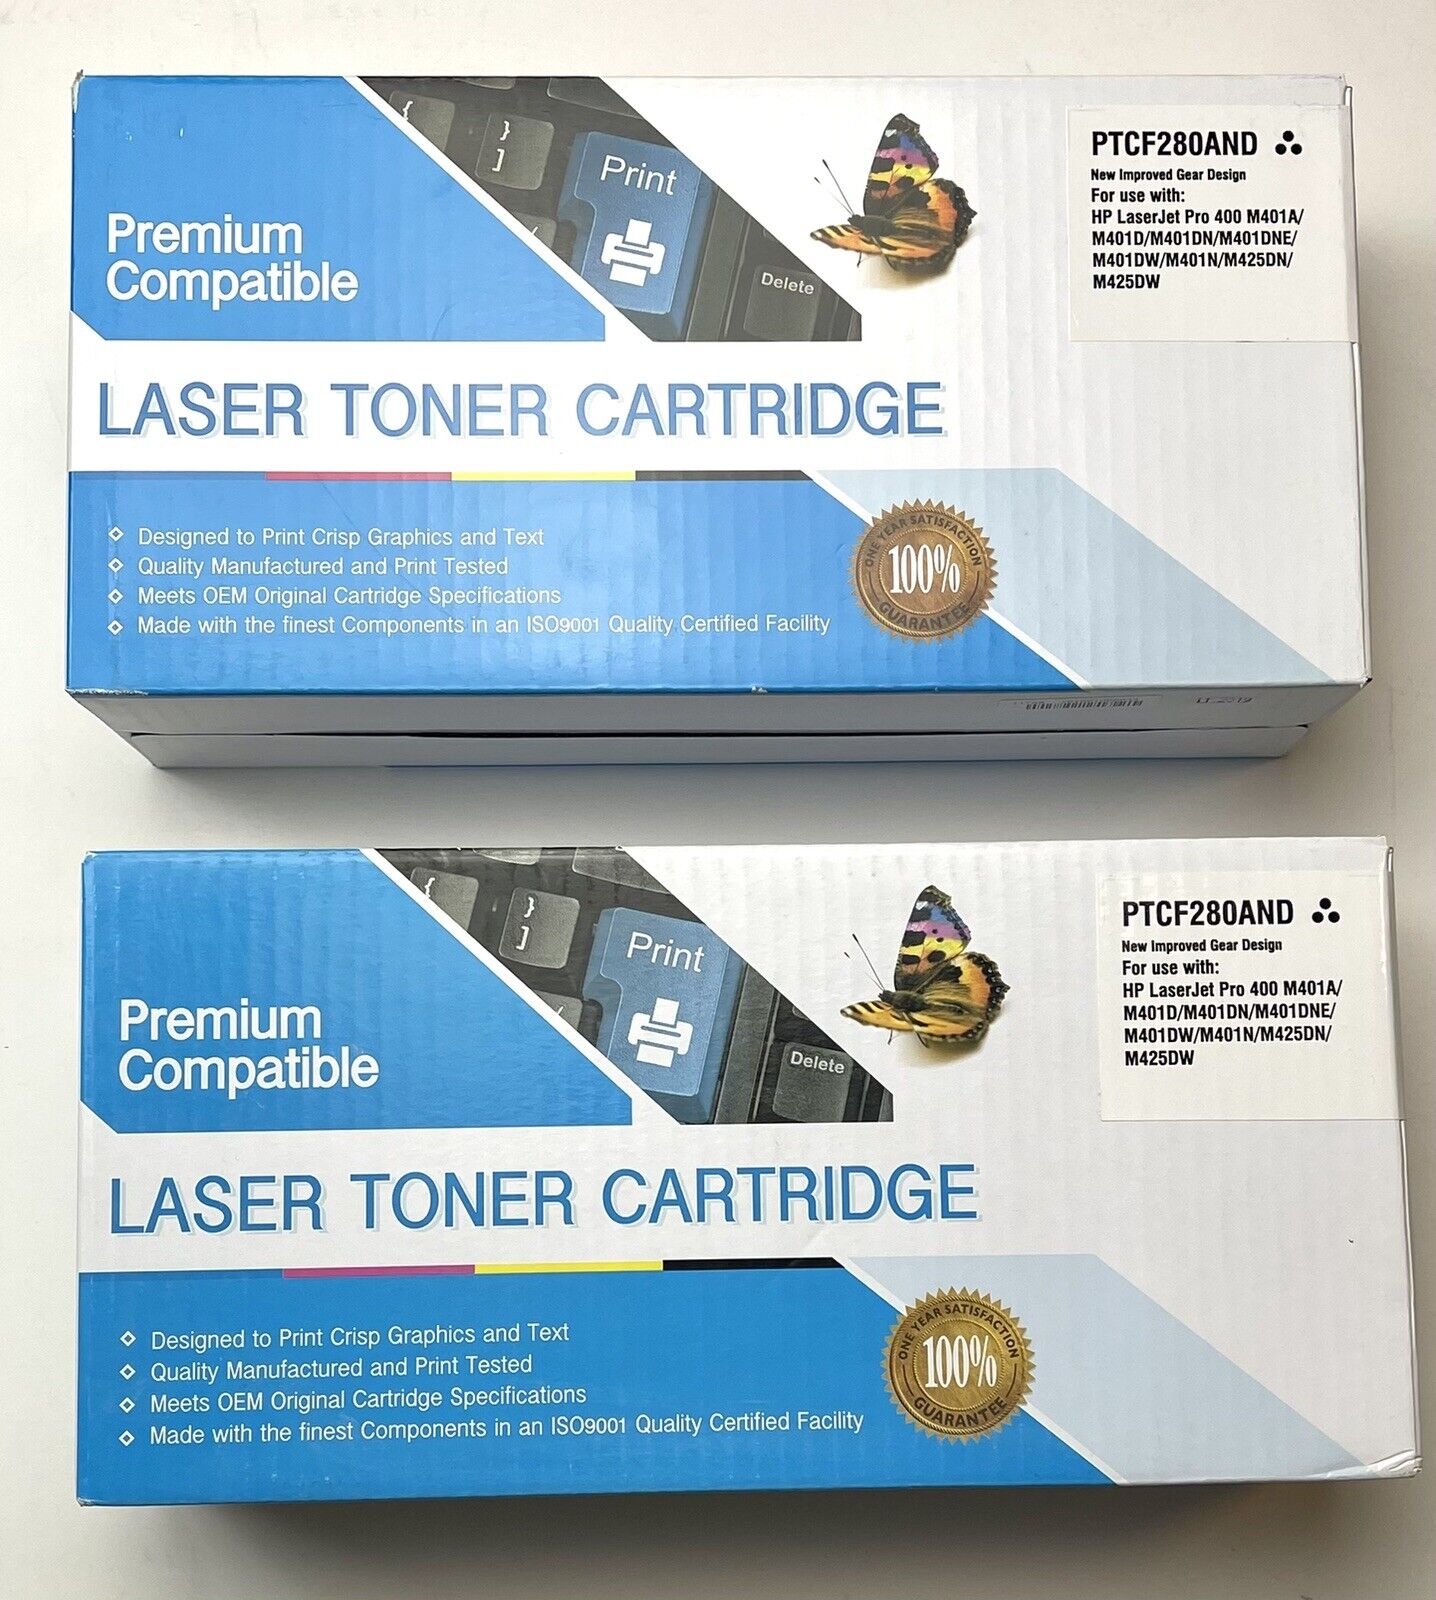 2x Premium Compatible Laser TONER CARTRIDGE Black PTCF280AND for HP 400 NIB NEW